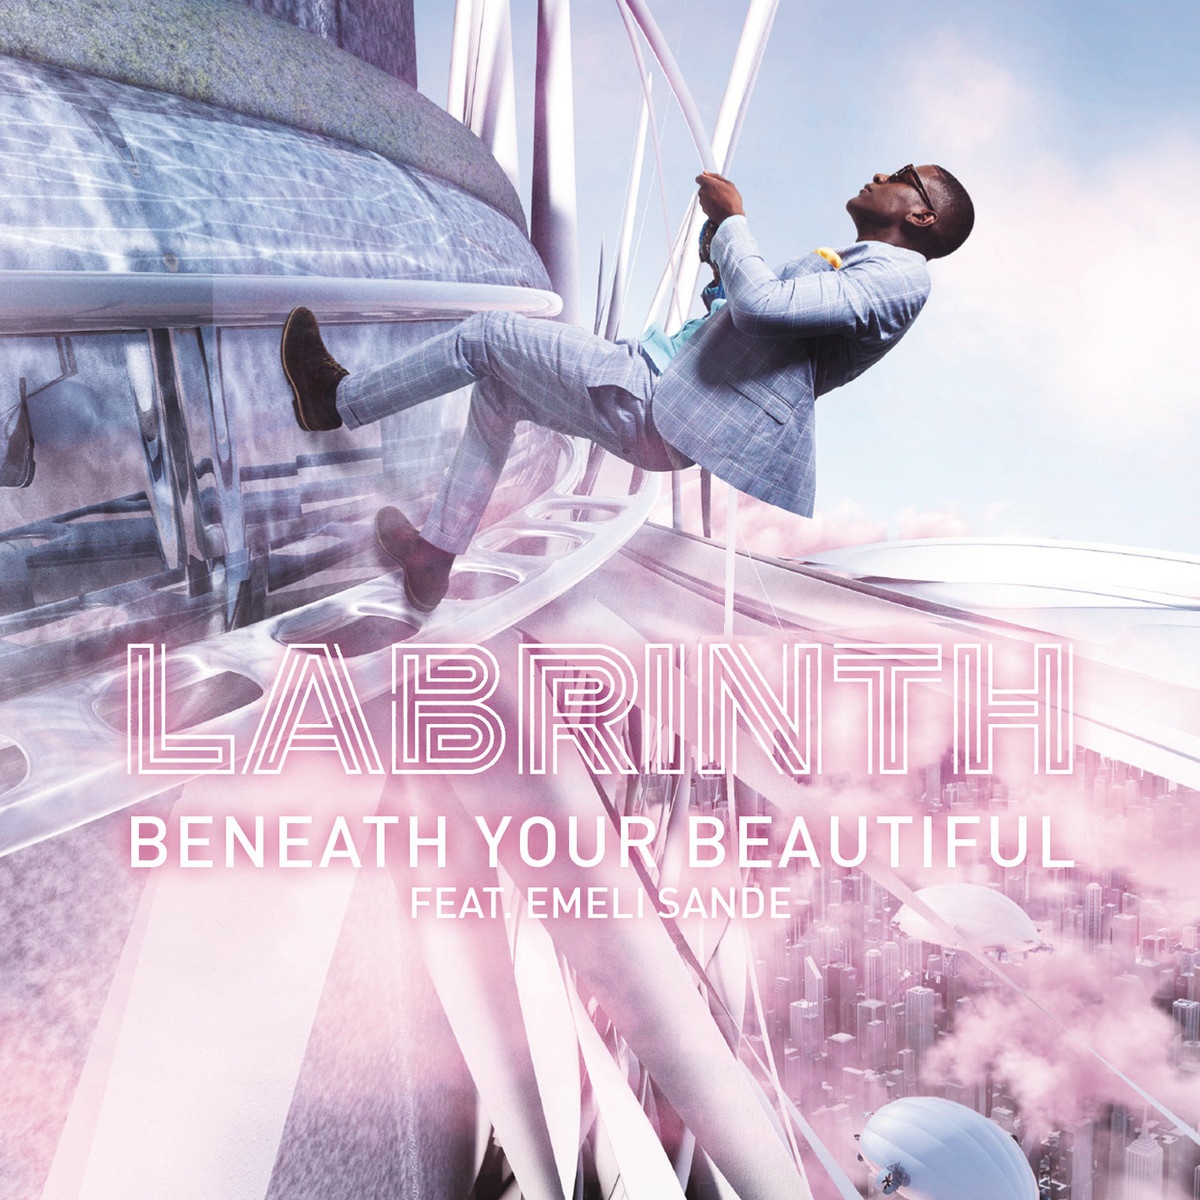 Beneath Your Beautiful feat. Emeli Sande